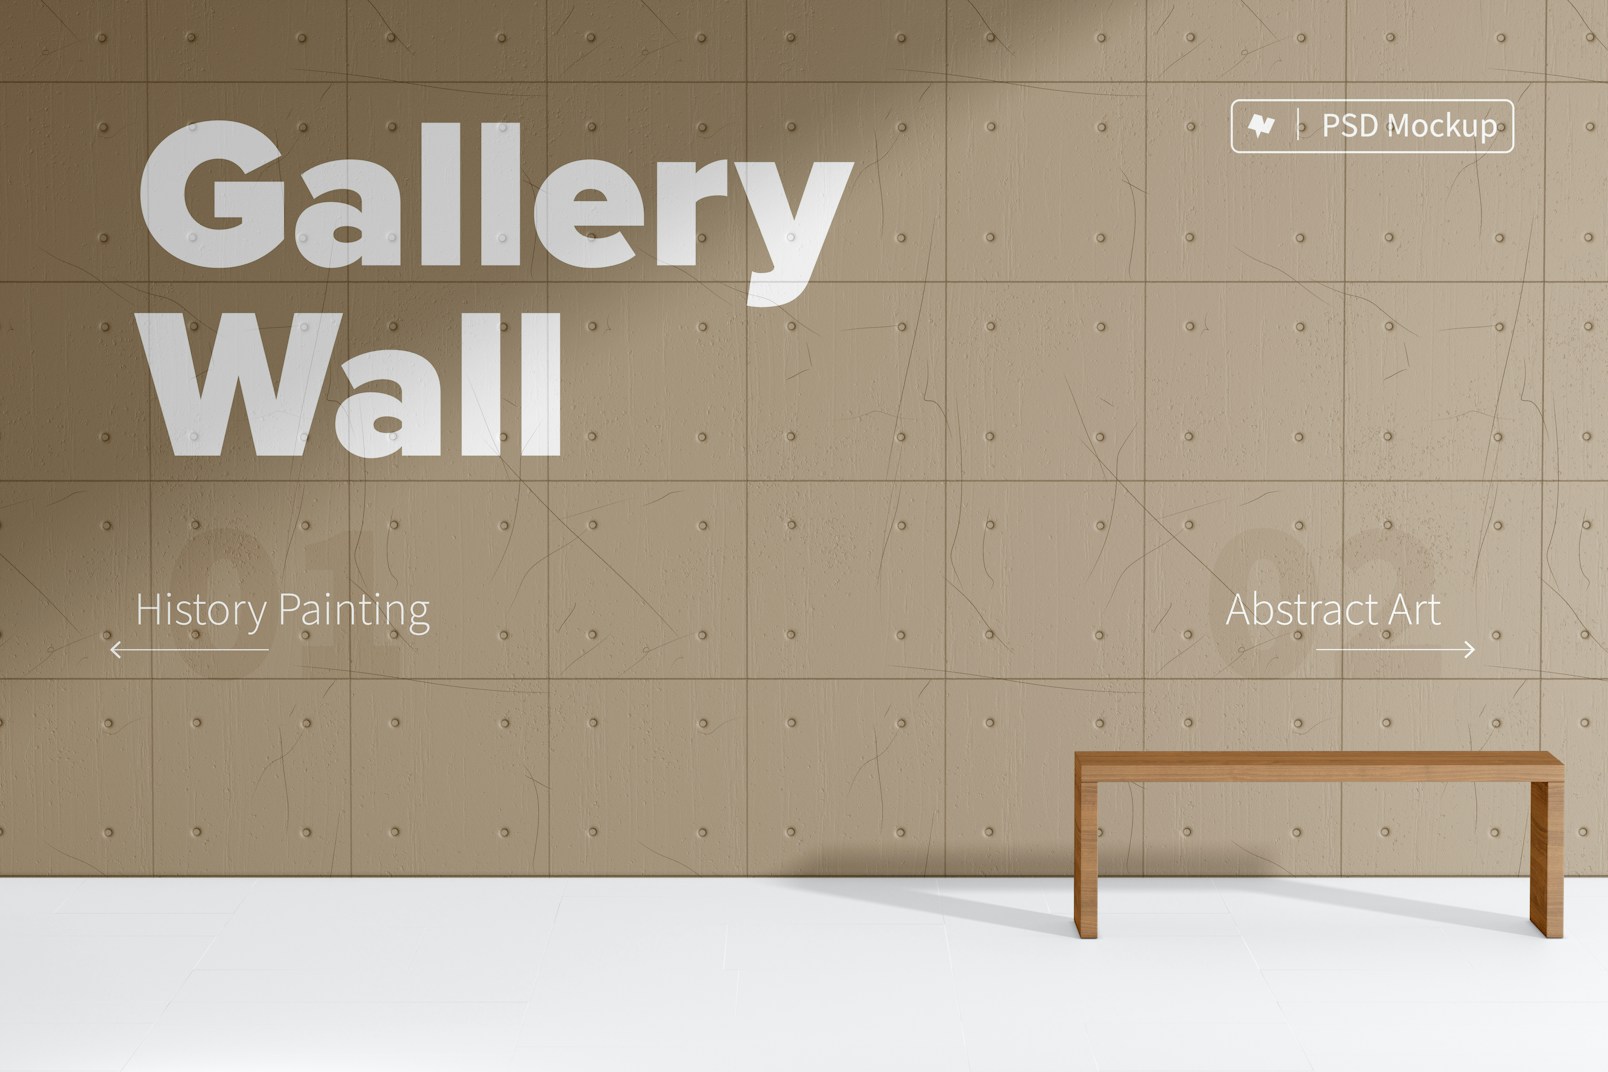 Gallery Wall Mockup